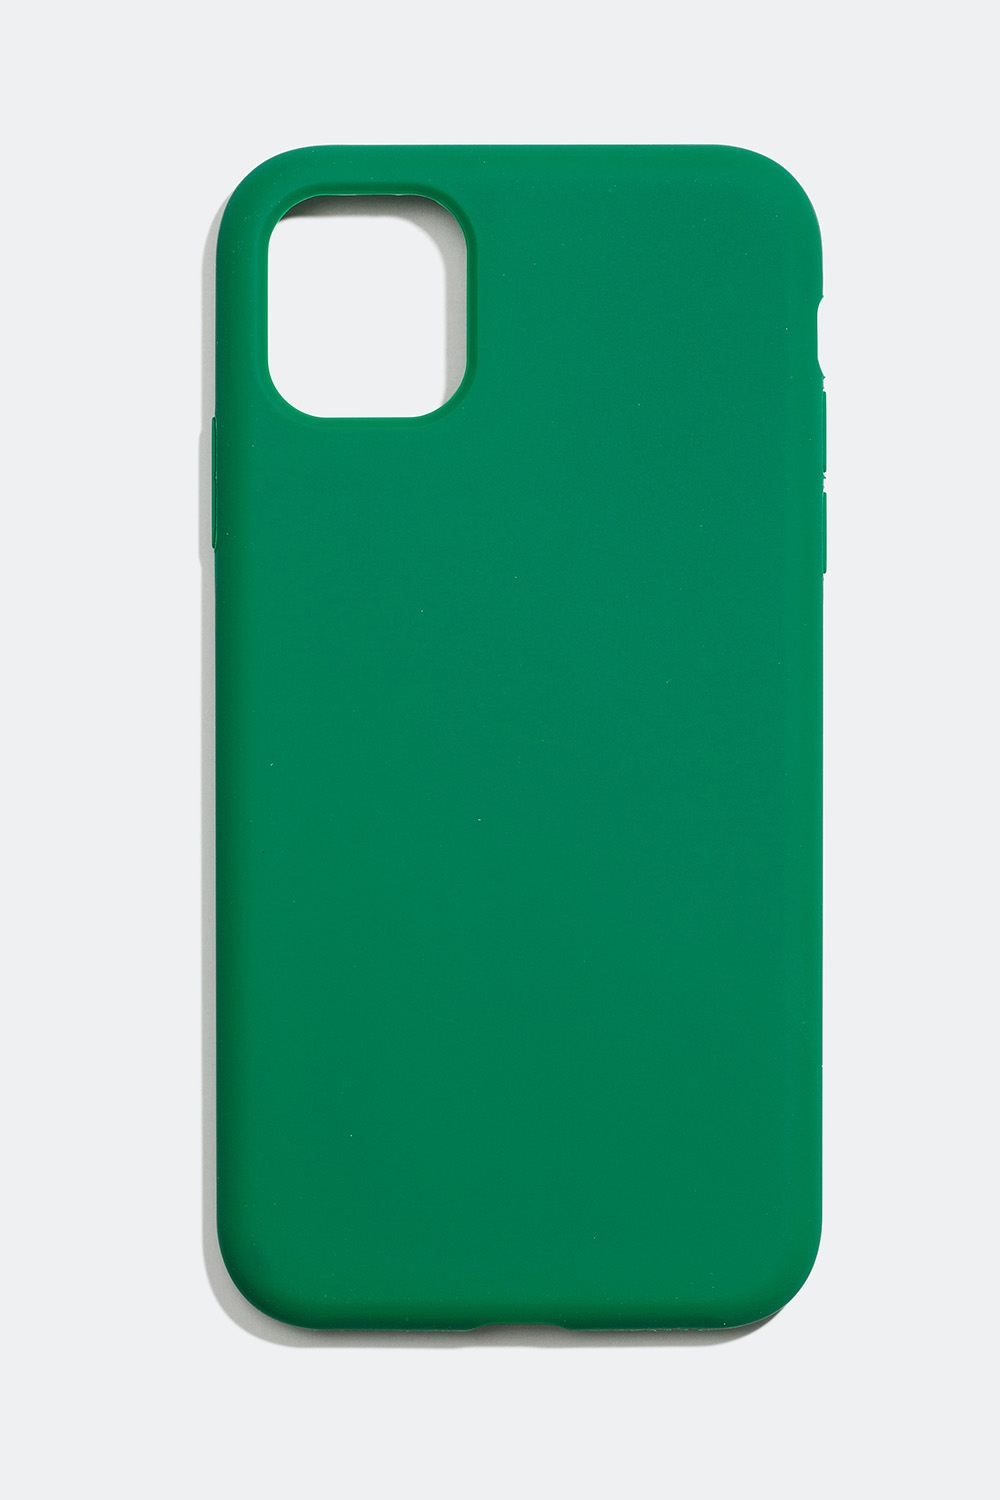 Matt mobilskal i grönt, iPhone 11/XR i gruppen Accessoarer / Mobiltillbehör / Mobilskal / iPhone 11 / XR hos Glitter (174000357711)